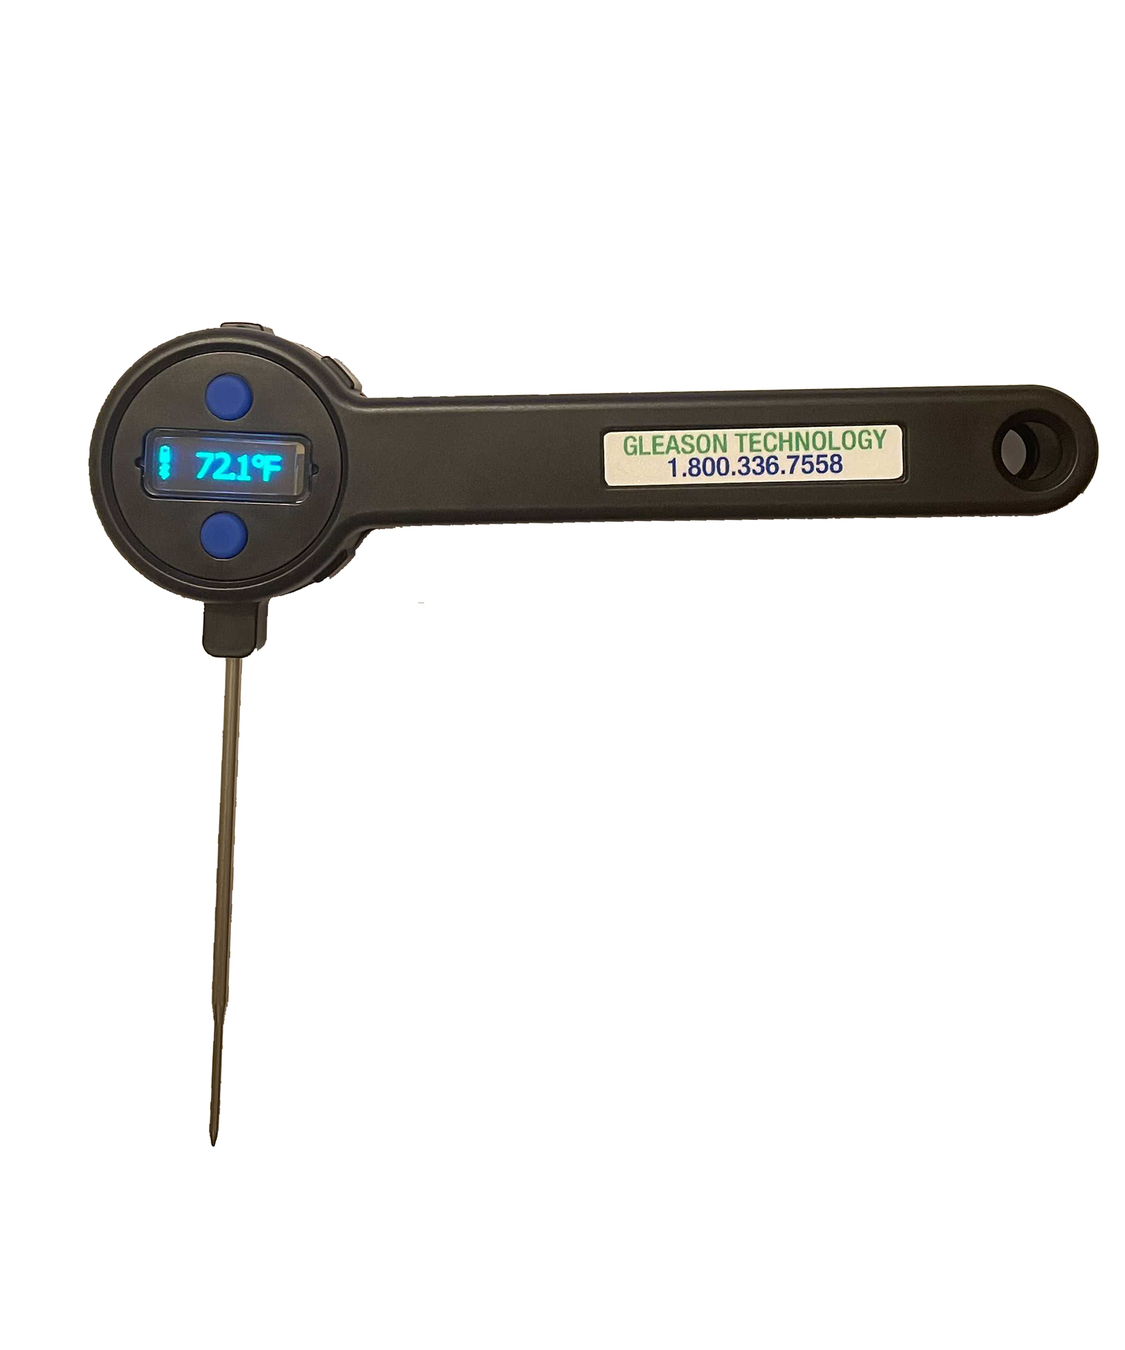 Proprietary T3™ Smart Thermometer